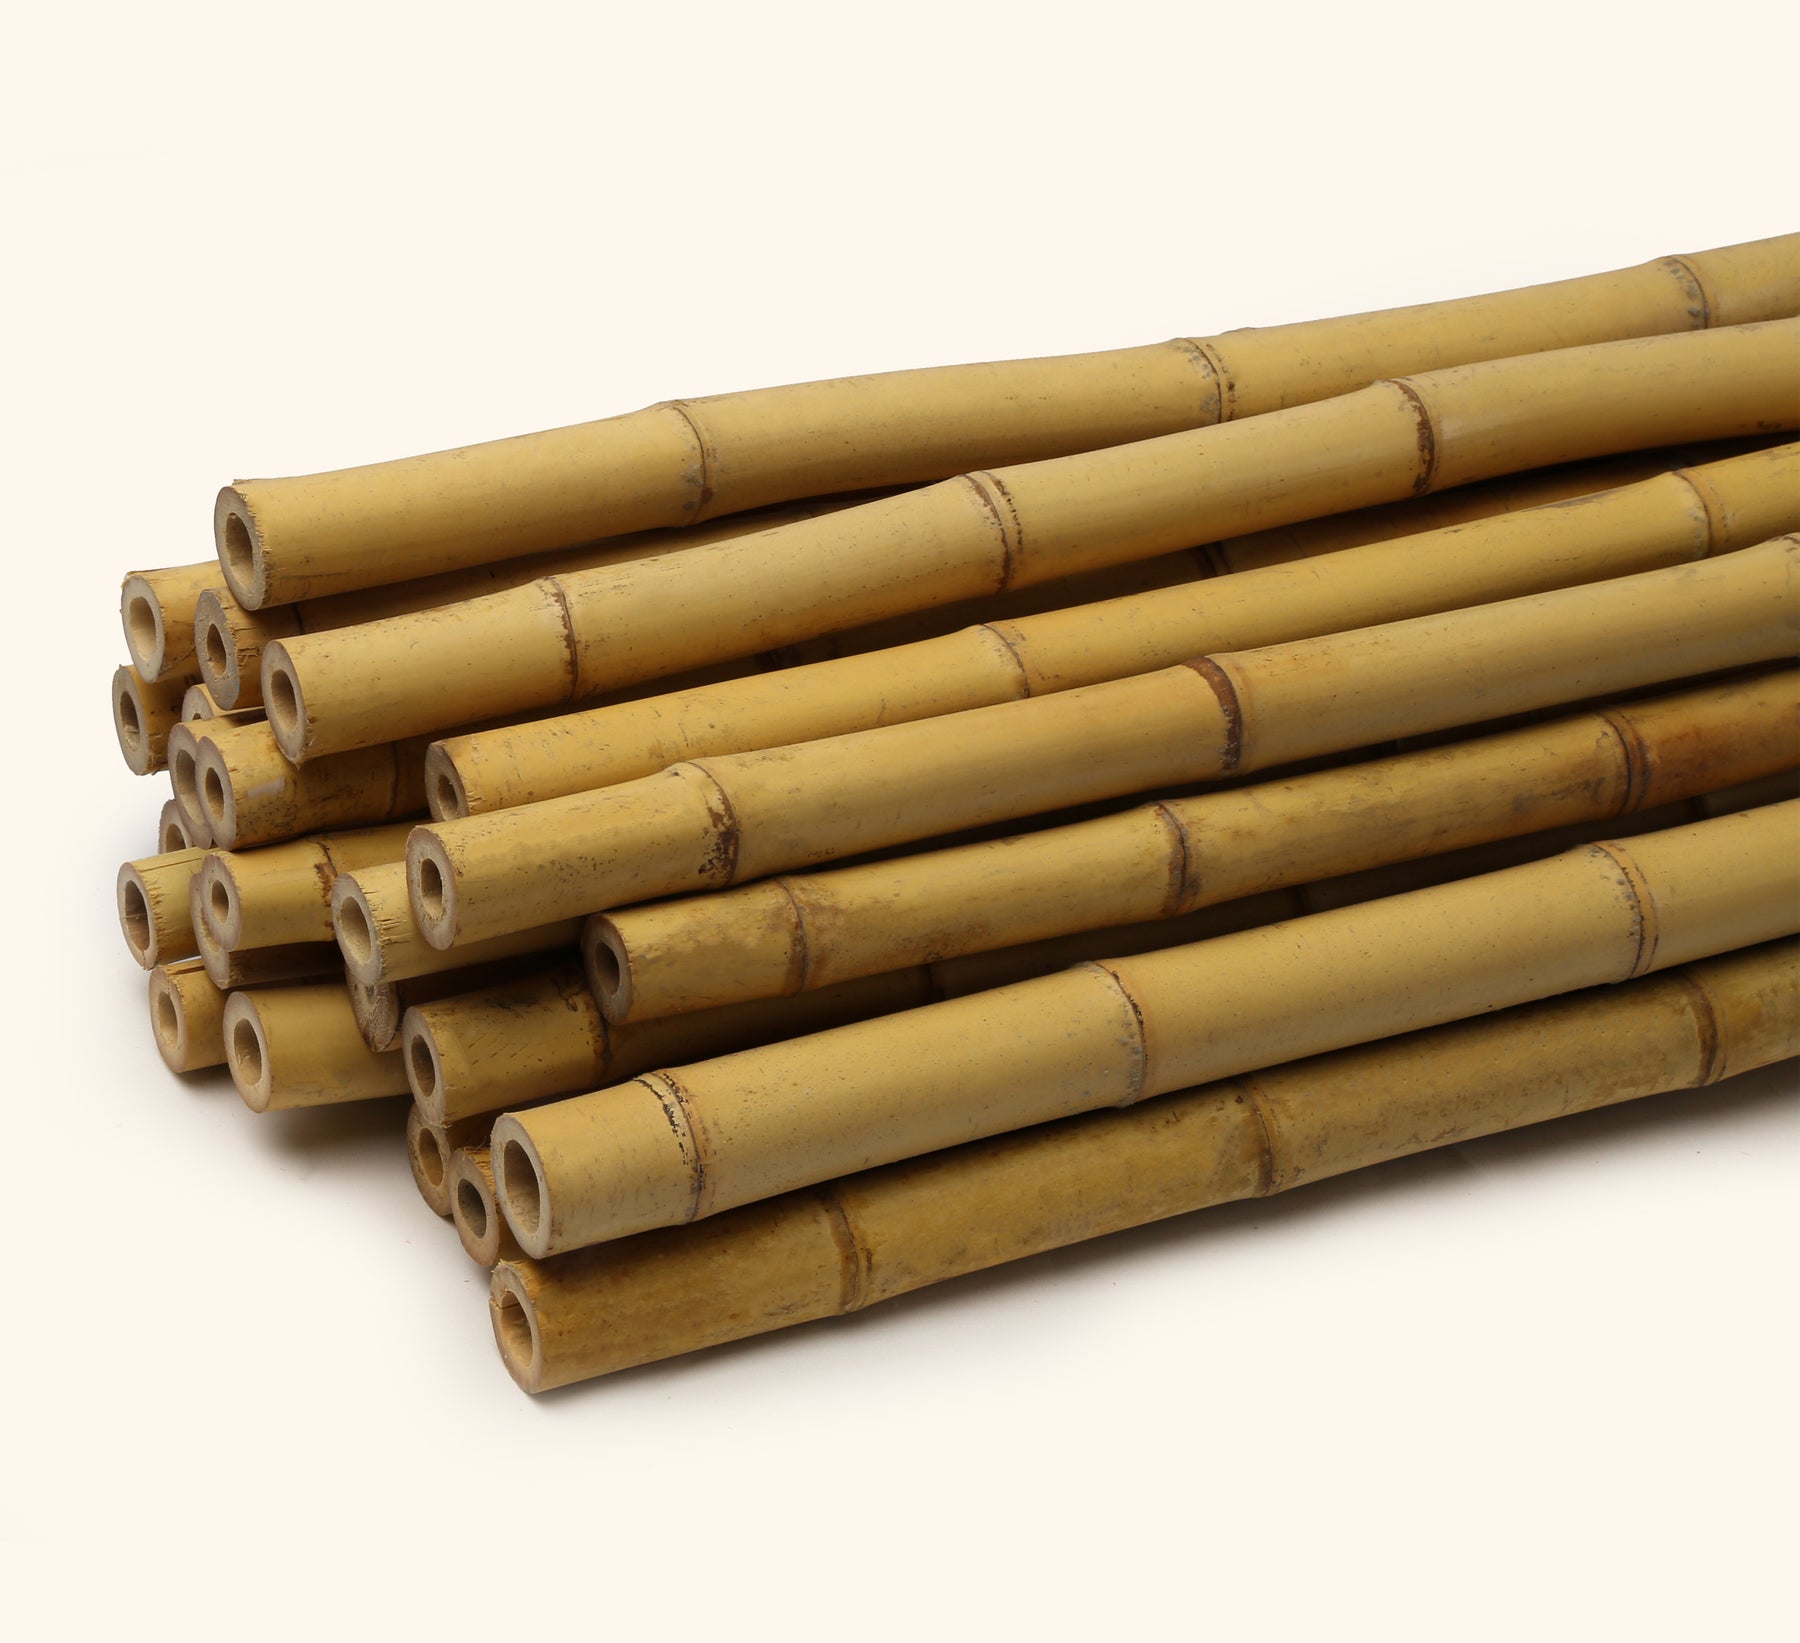 Schach for Sukkahs - Bamboo Mats - Kosher Mehadrin – The Sukkah Store